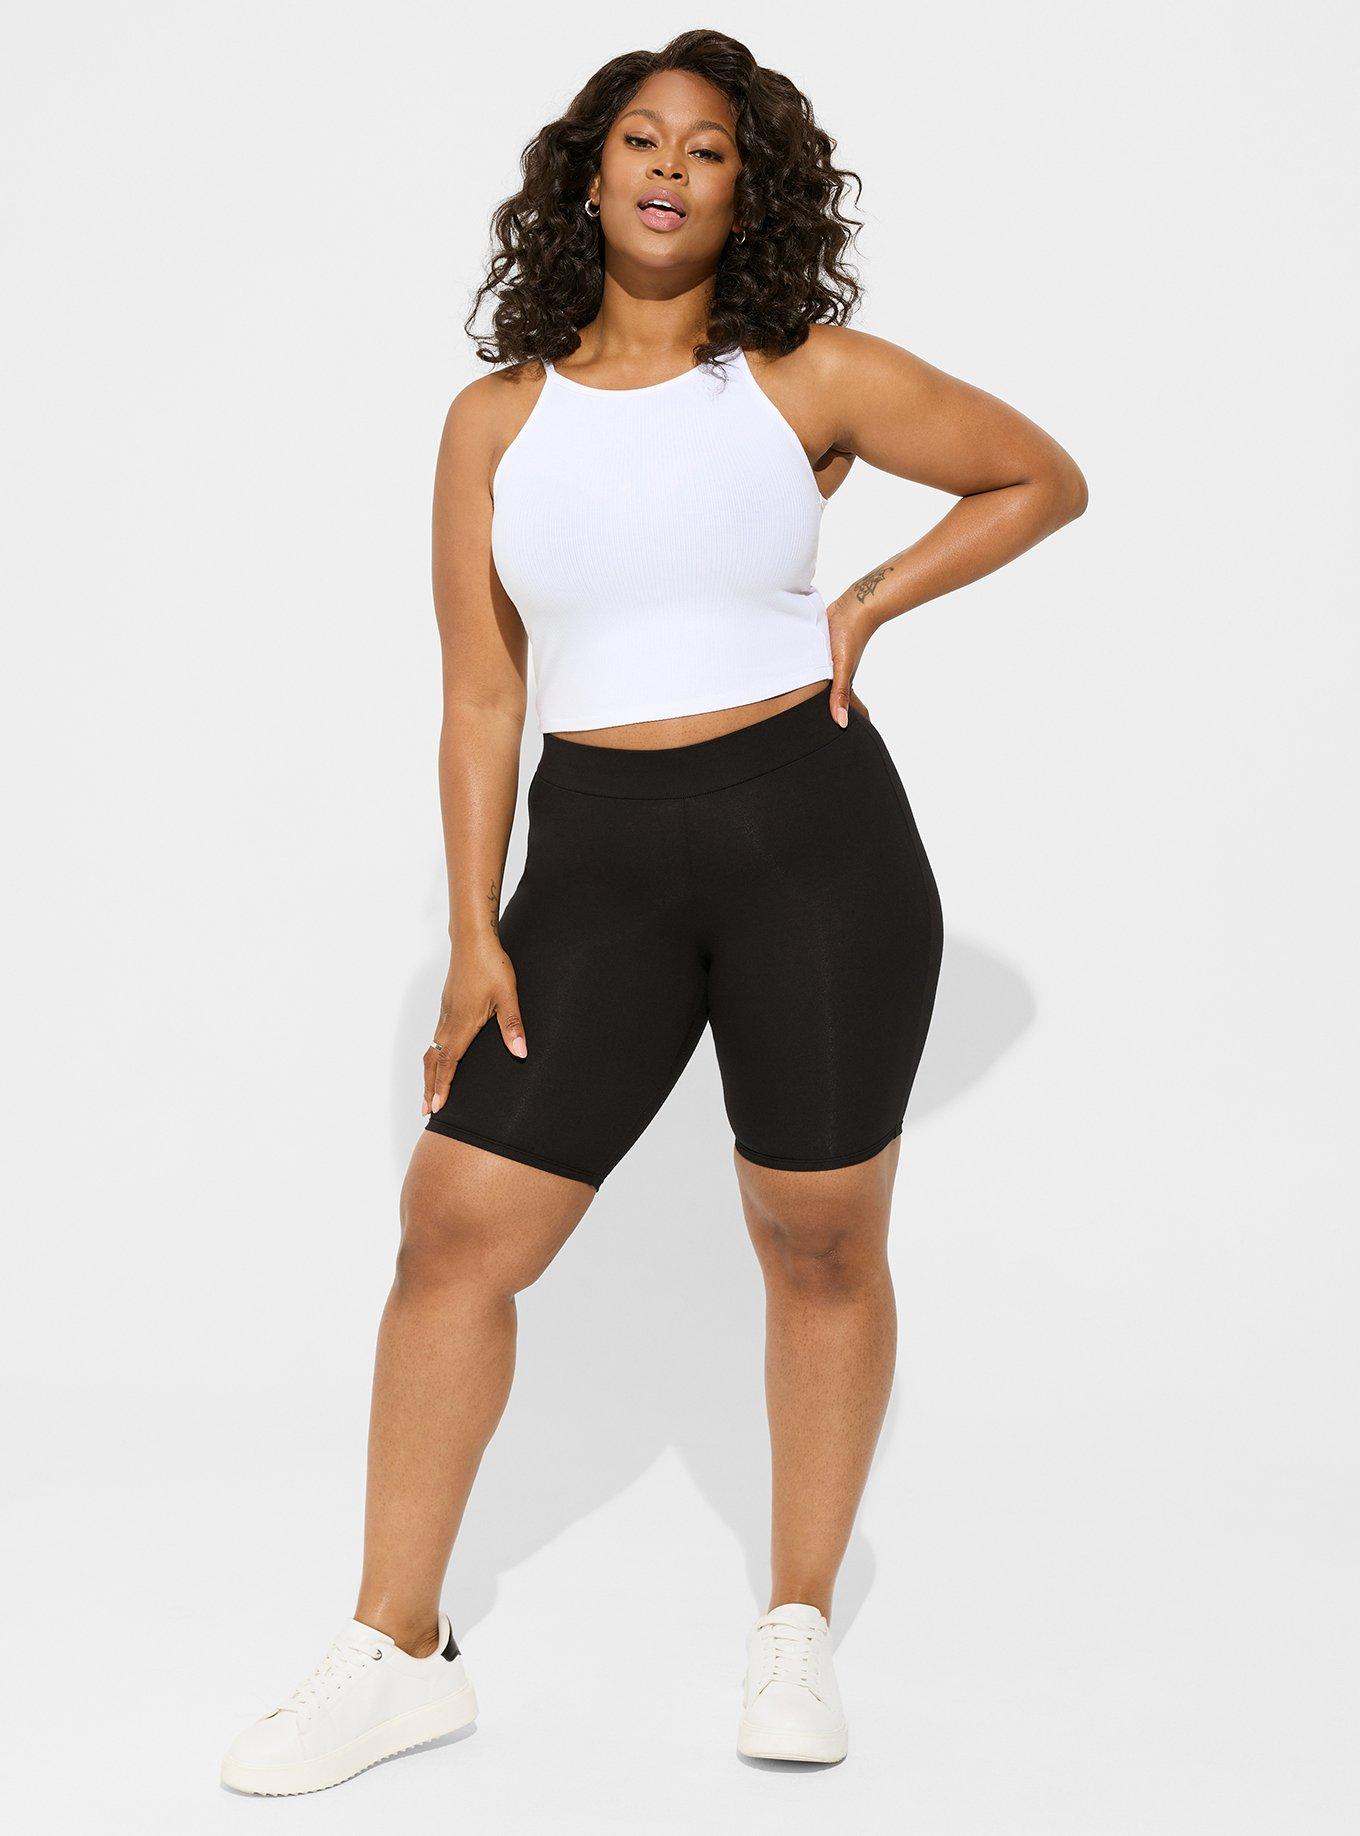 Popular Women's Plus Size Mid-Thigh Cotton Bike Shorts (1X, Black